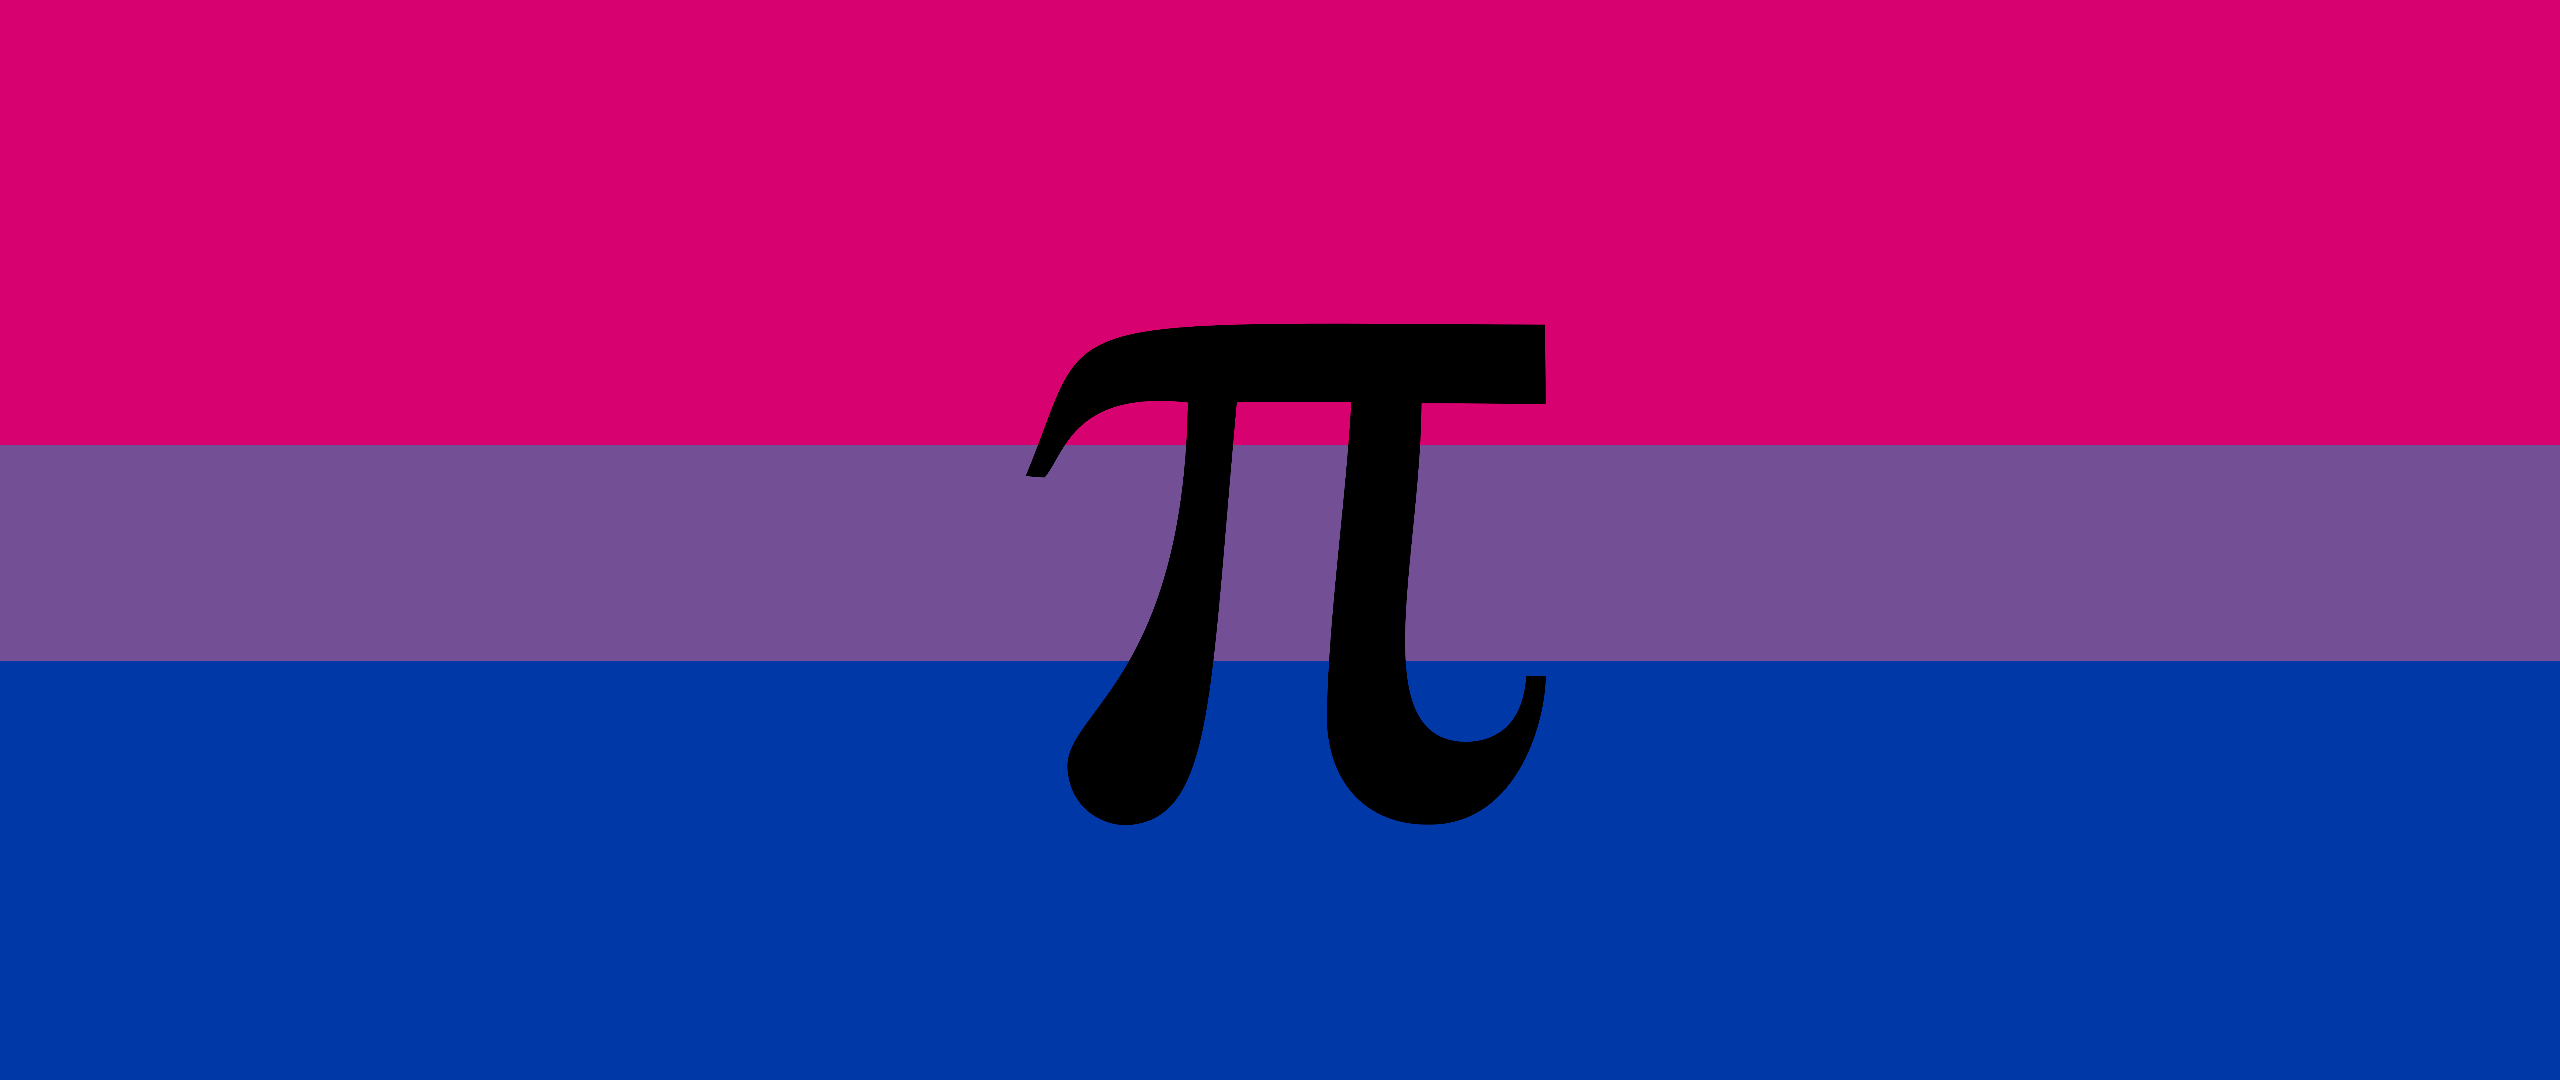 I made a bisexual polyamorous (like me) pride flag wallpaper